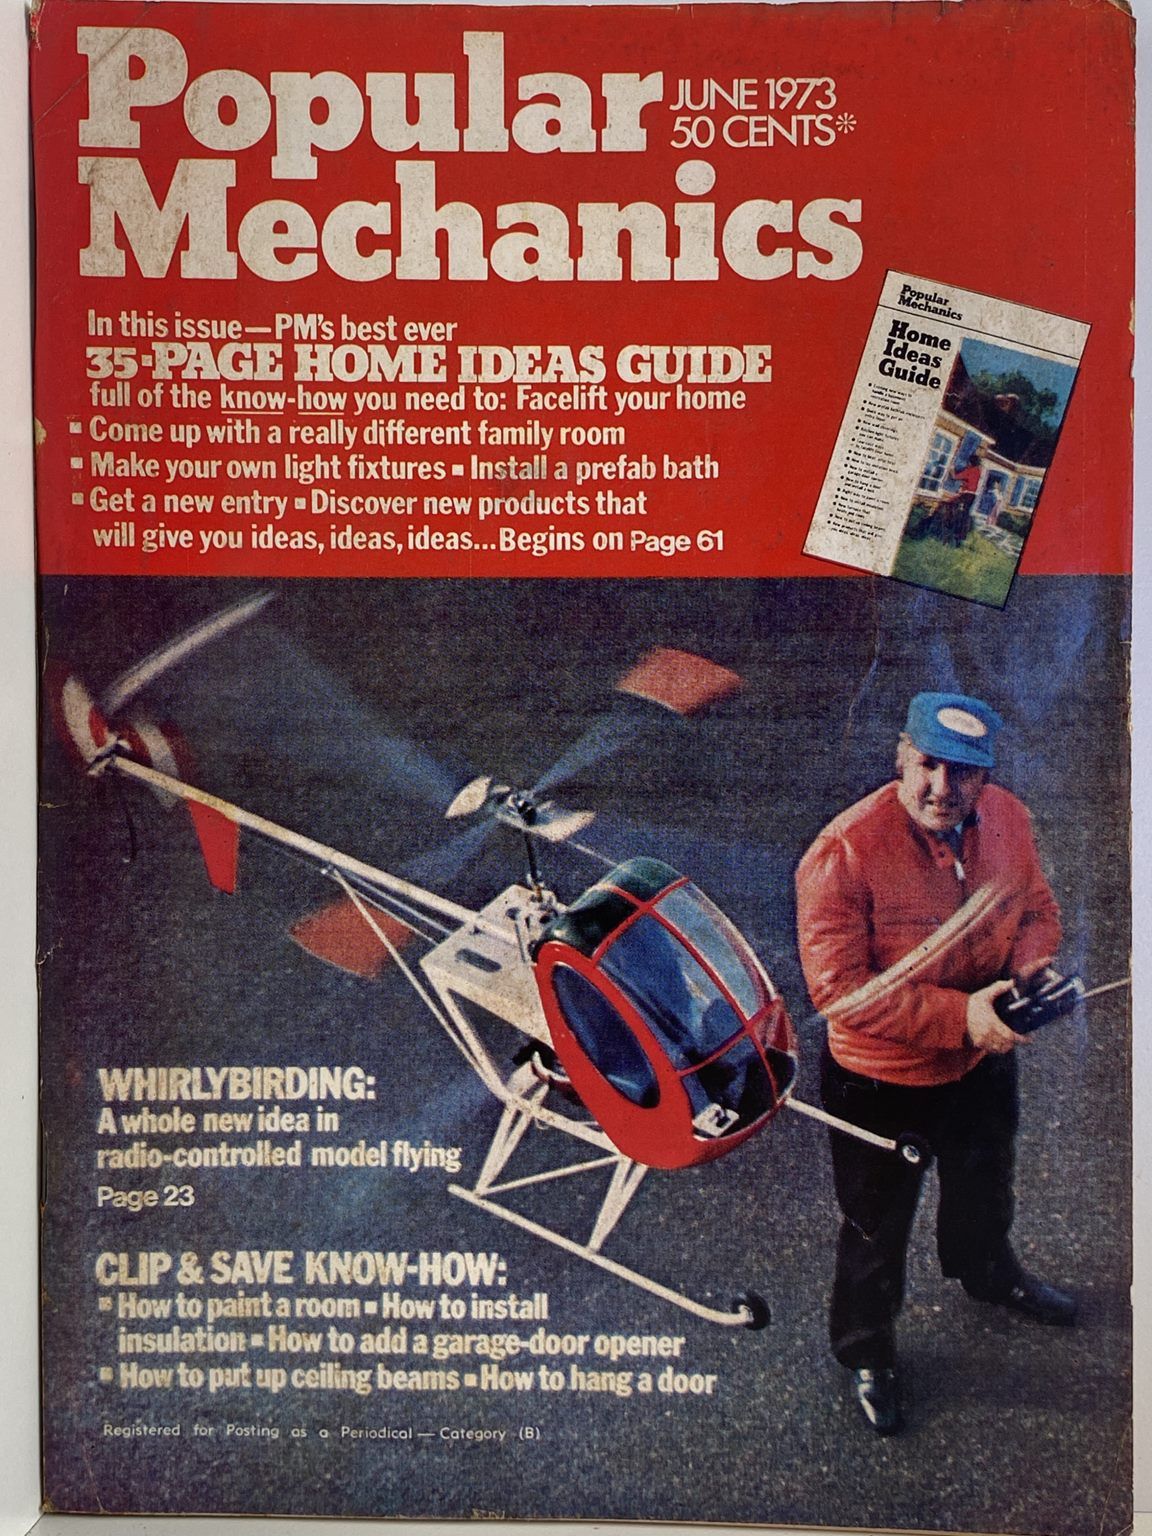 VINTAGE MAGAZINE: Popular Mechanics - Vol. 139, No. 4 - June 1973